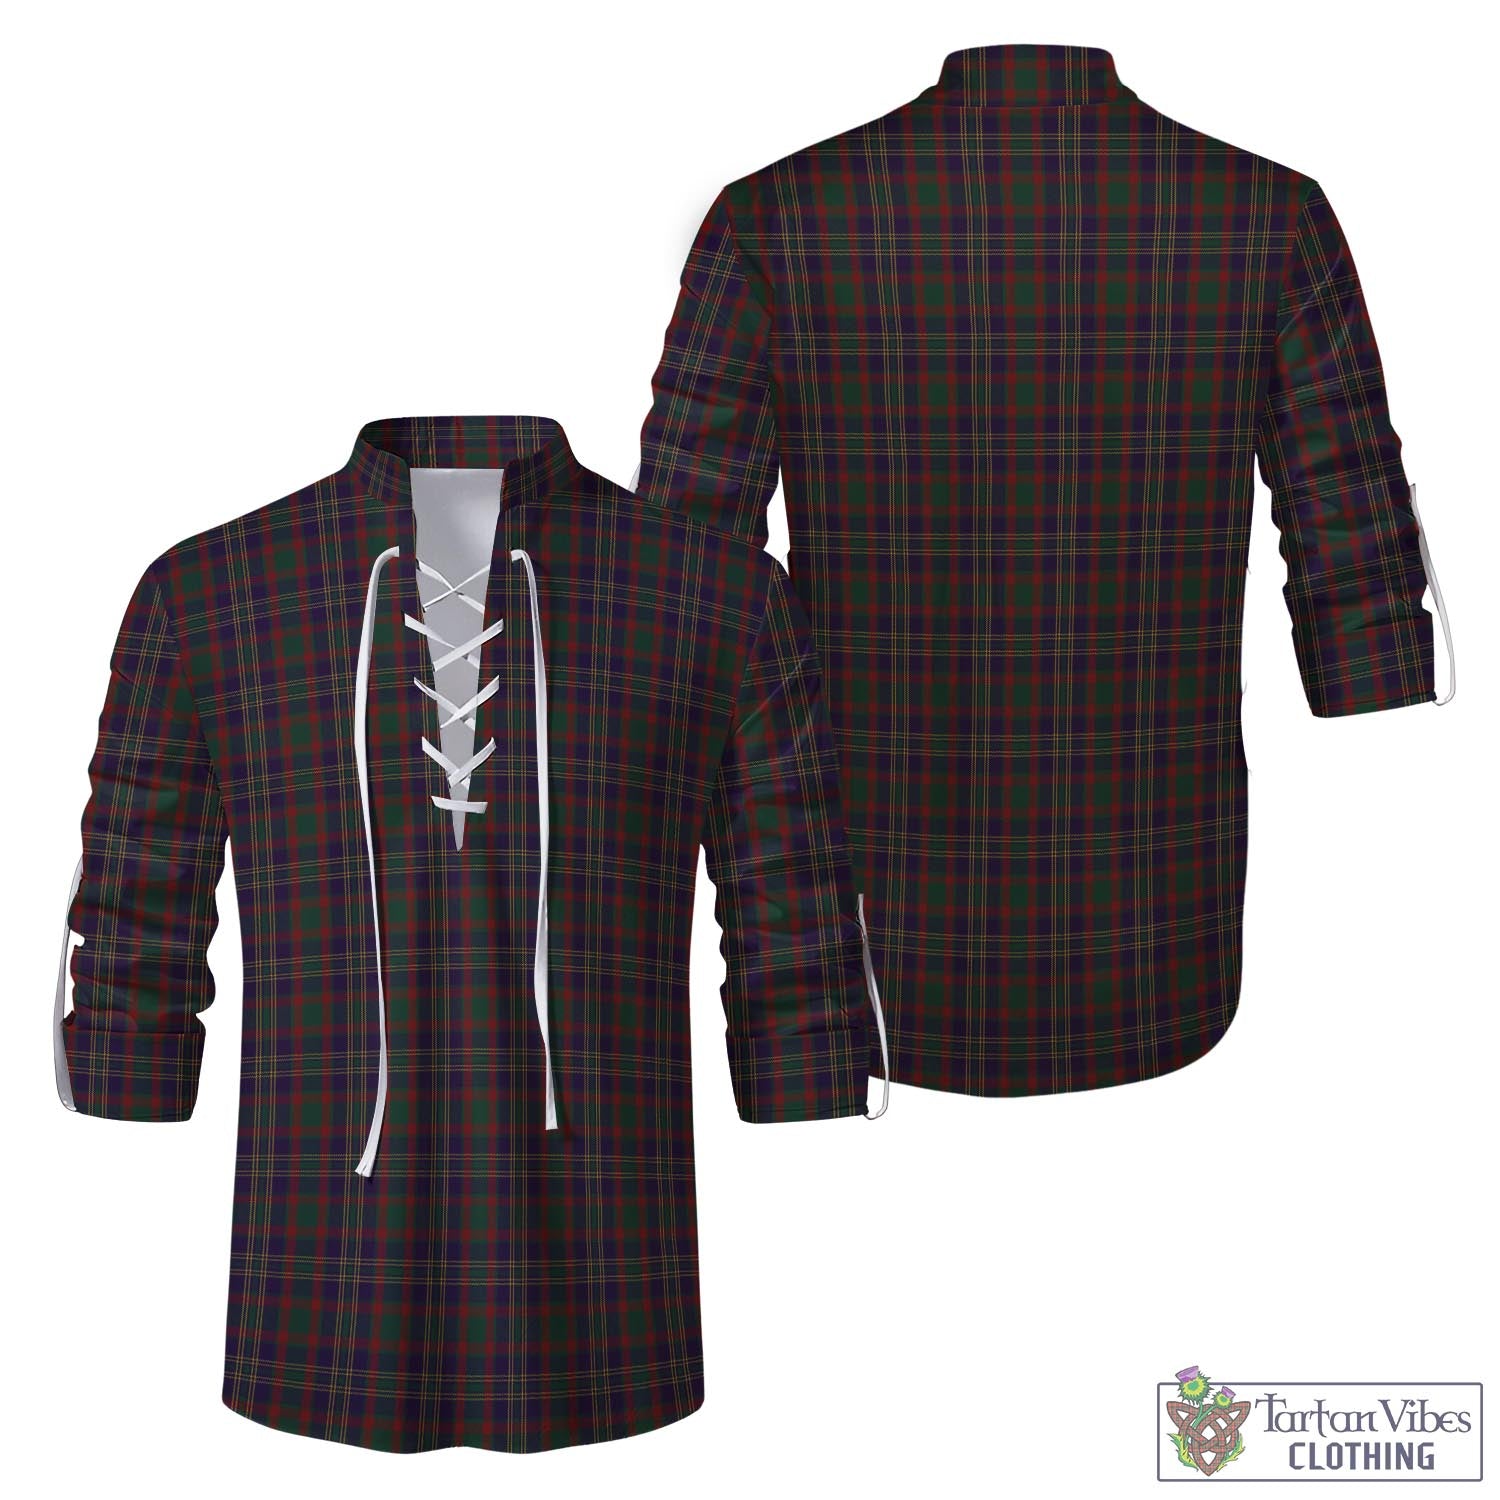 Tartan Vibes Clothing Cork County Ireland Tartan Men's Scottish Traditional Jacobite Ghillie Kilt Shirt